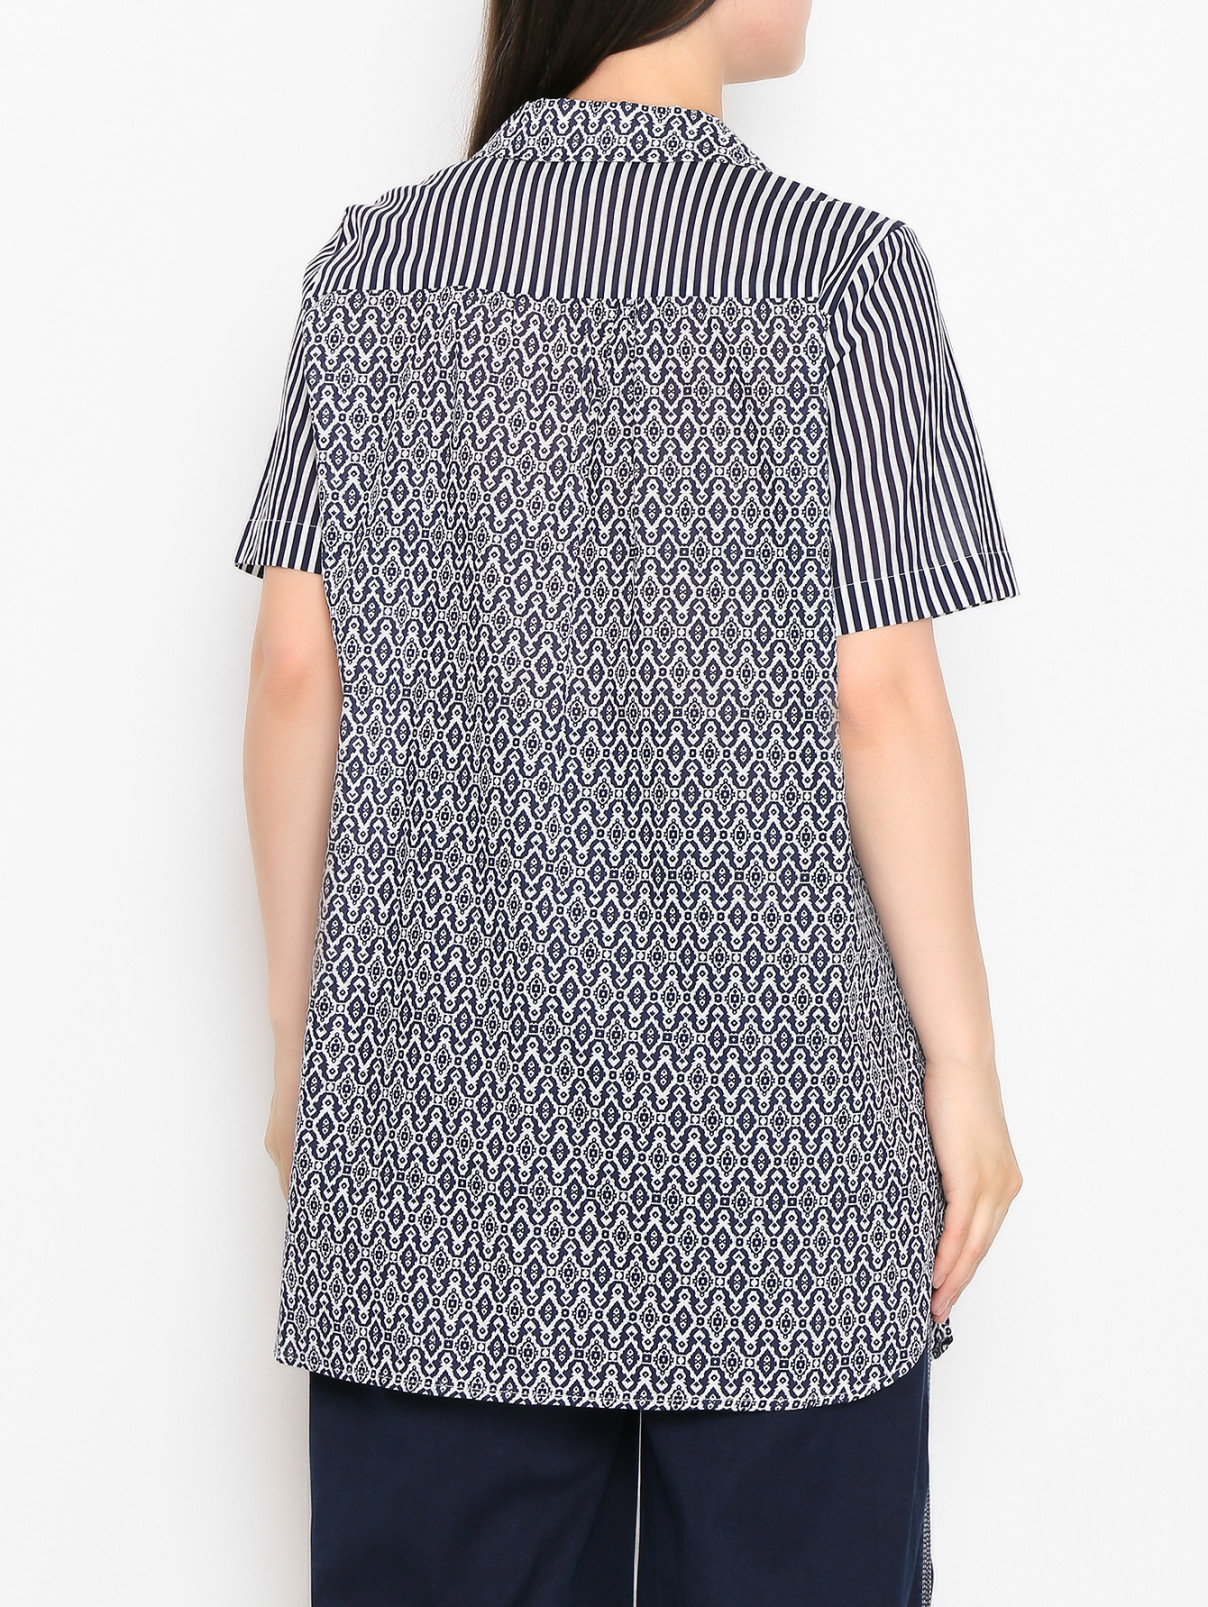 Рубашка из хлопка с узором и коротким рукавом Persona by Marina Rinaldi  –  МодельВерхНиз1  – Цвет:  Узор